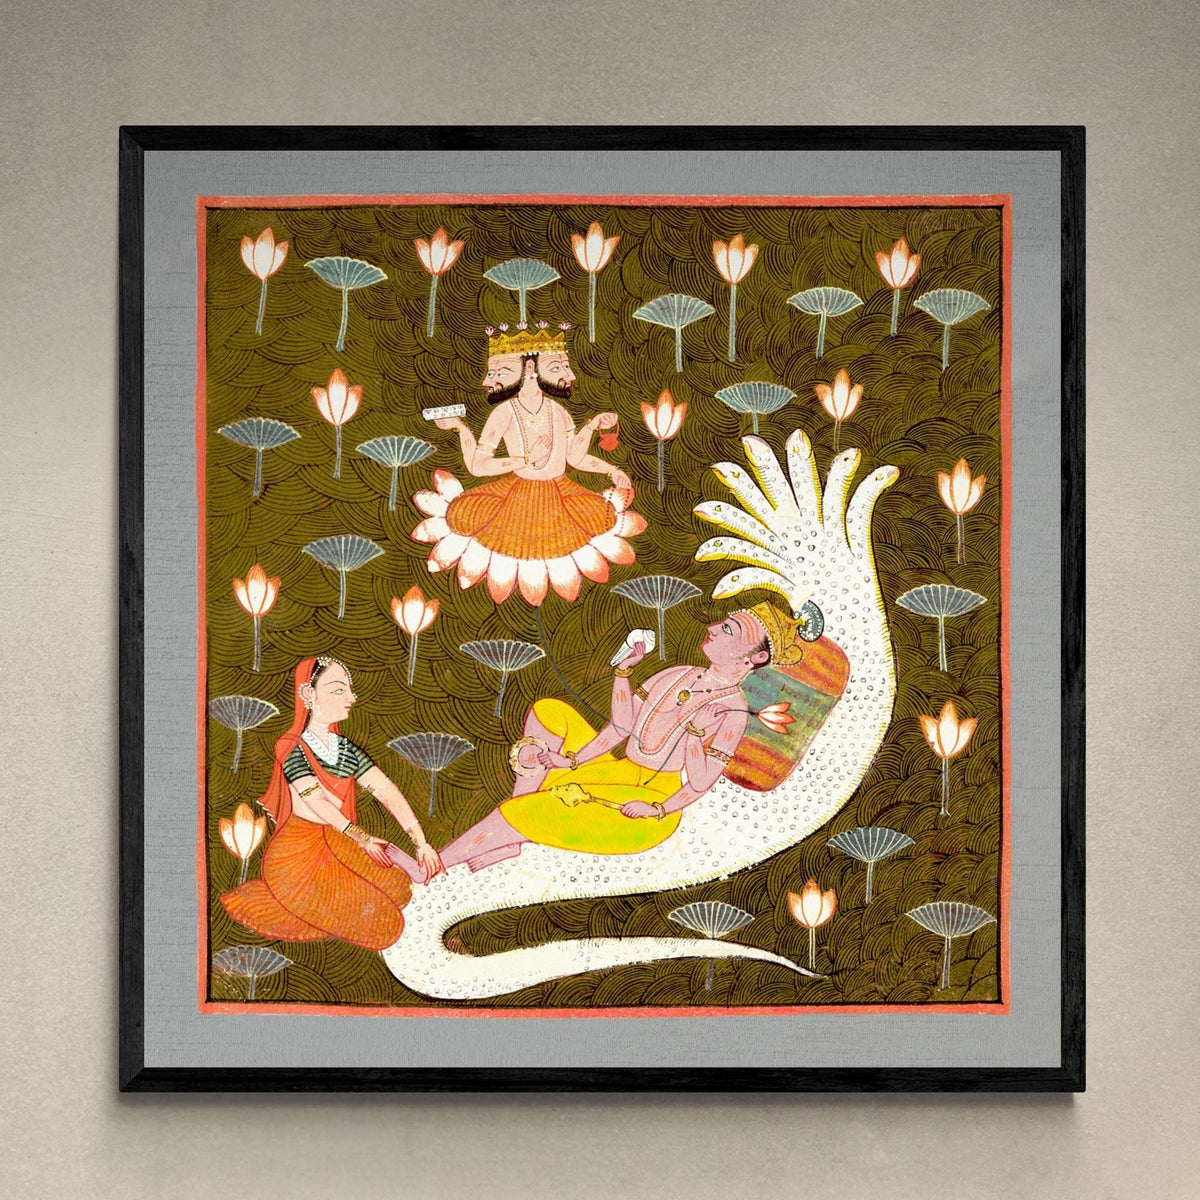 Framed Cosmic Universe Creation Mythology | Hindu Yoga Cosmology | Lotus Serpent Gift | Vintage Antique Vishnu on Ananta Framed Art Print